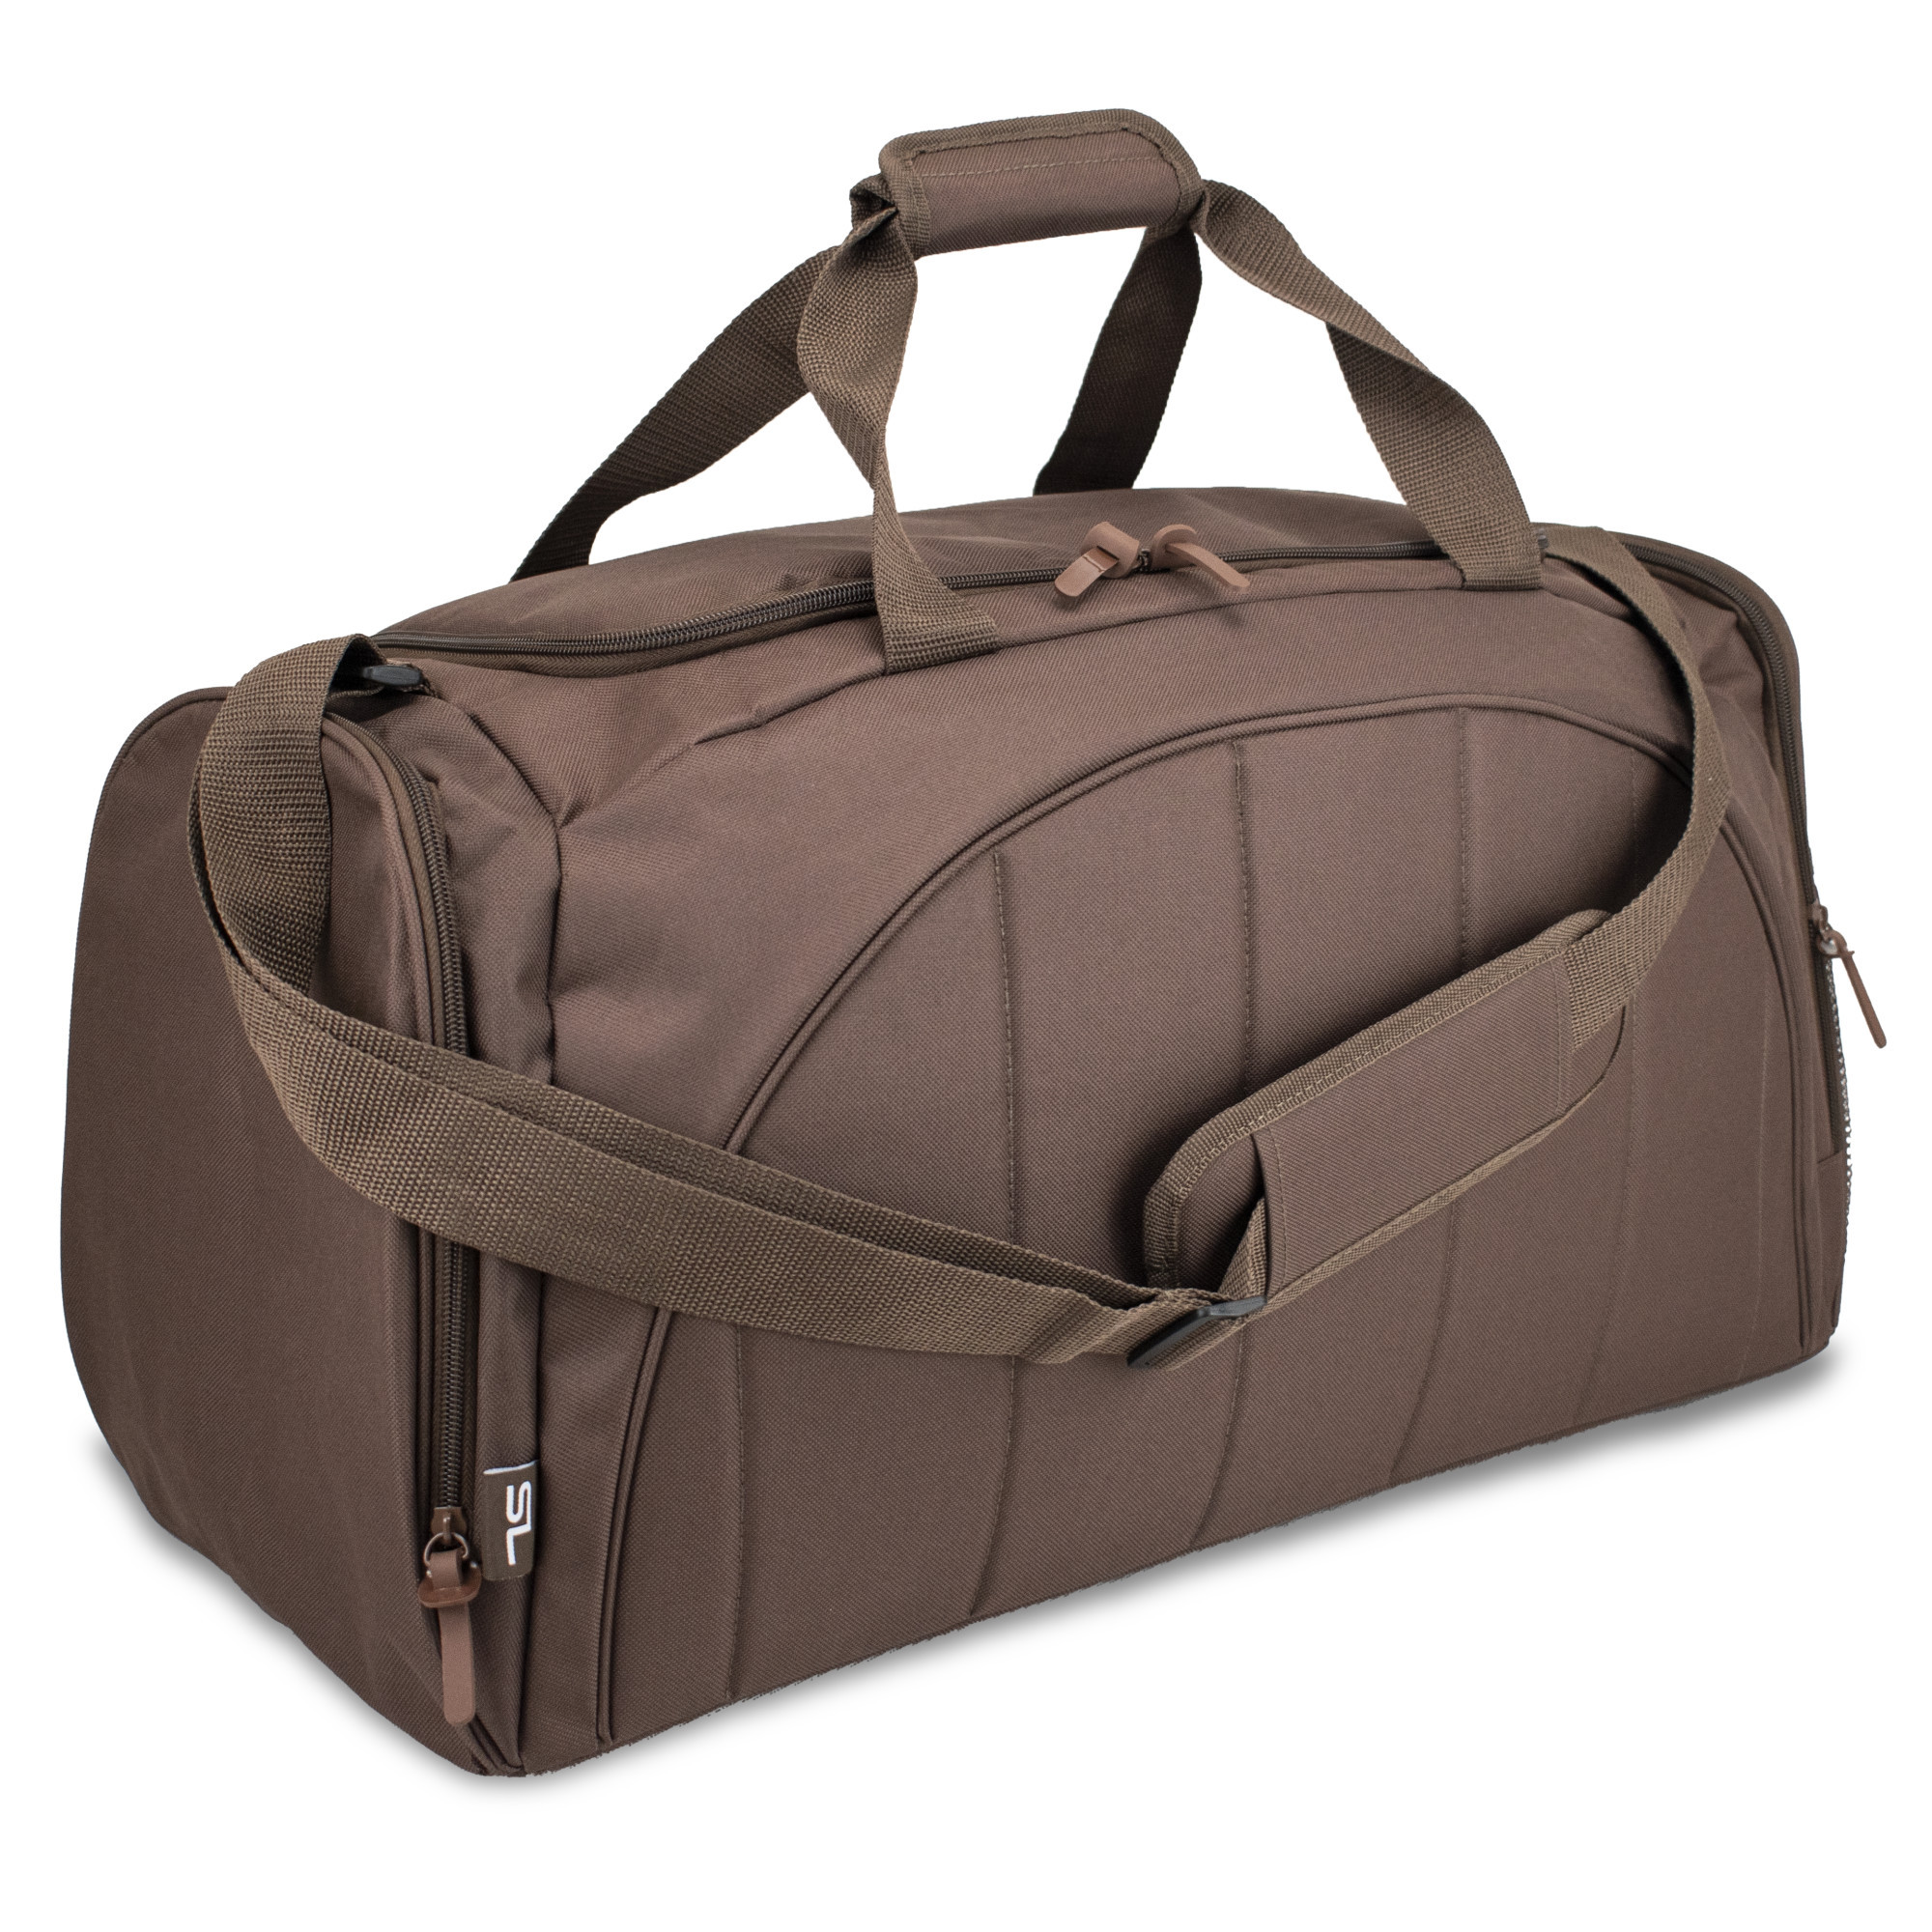 Semiline Fitness_Travel Bag A3029-2 Brown 57 cm x 30,5 cm x 27 cm